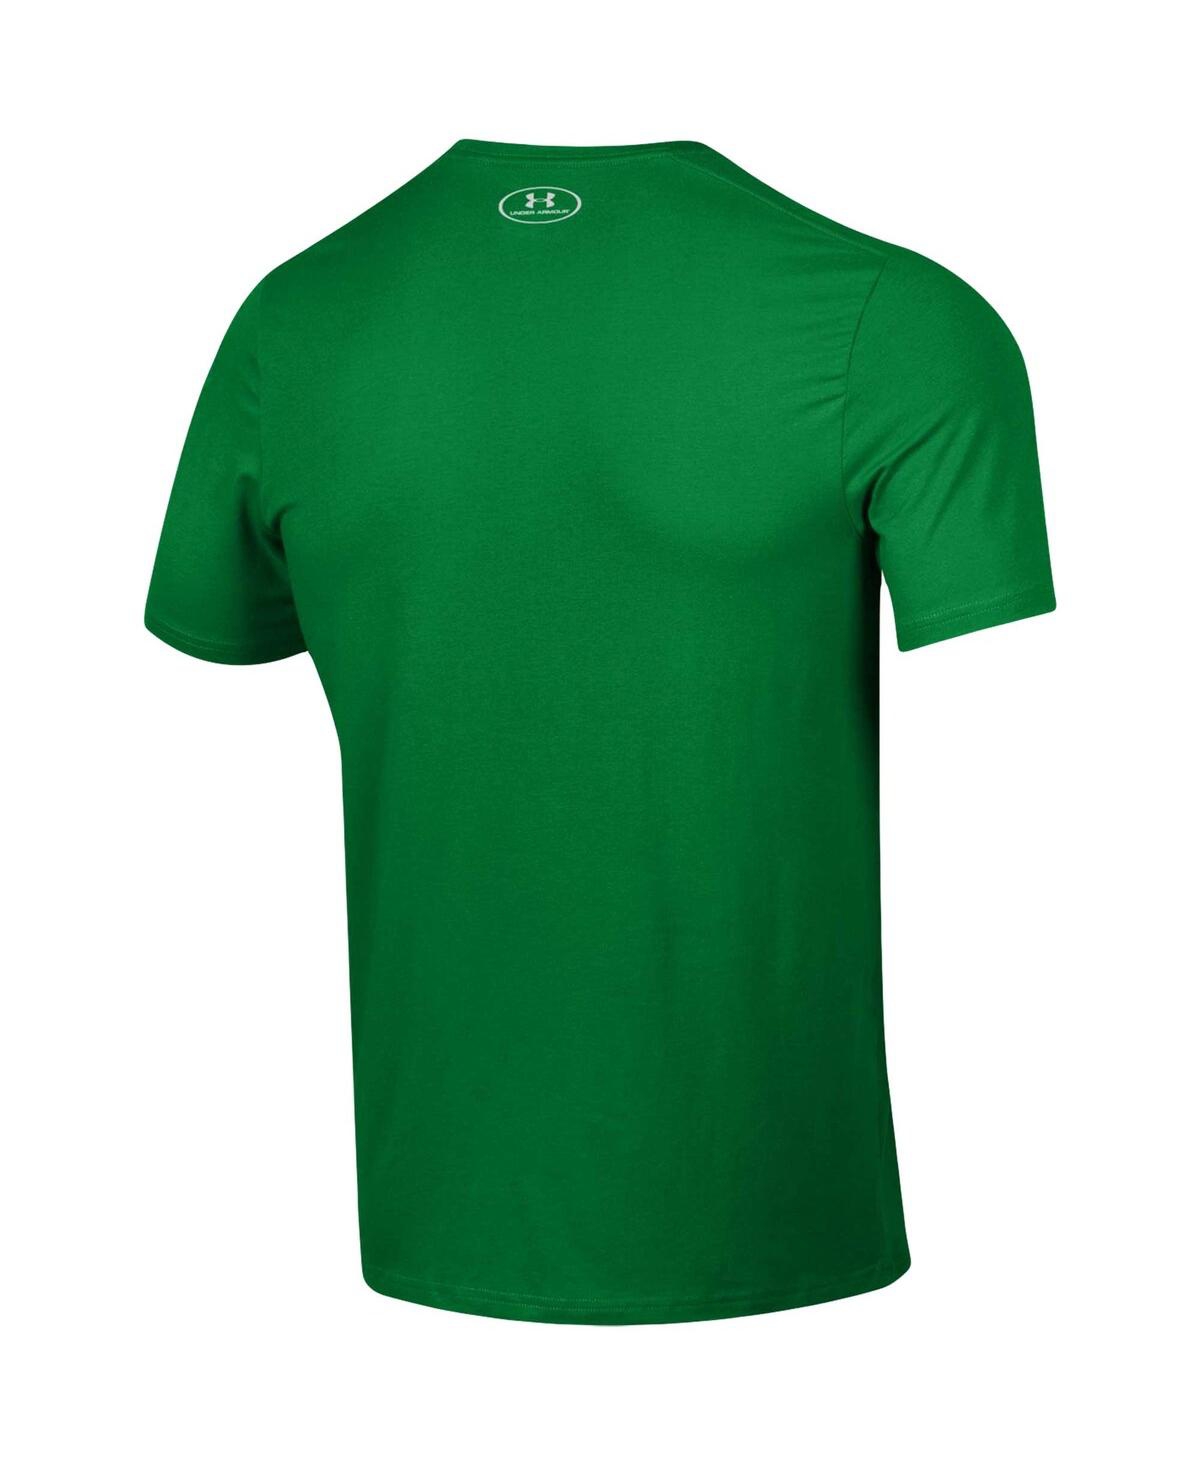 Shop Under Armour Men's  Green Notre Dame Fighting Irish Here Come The Irish T-shirt